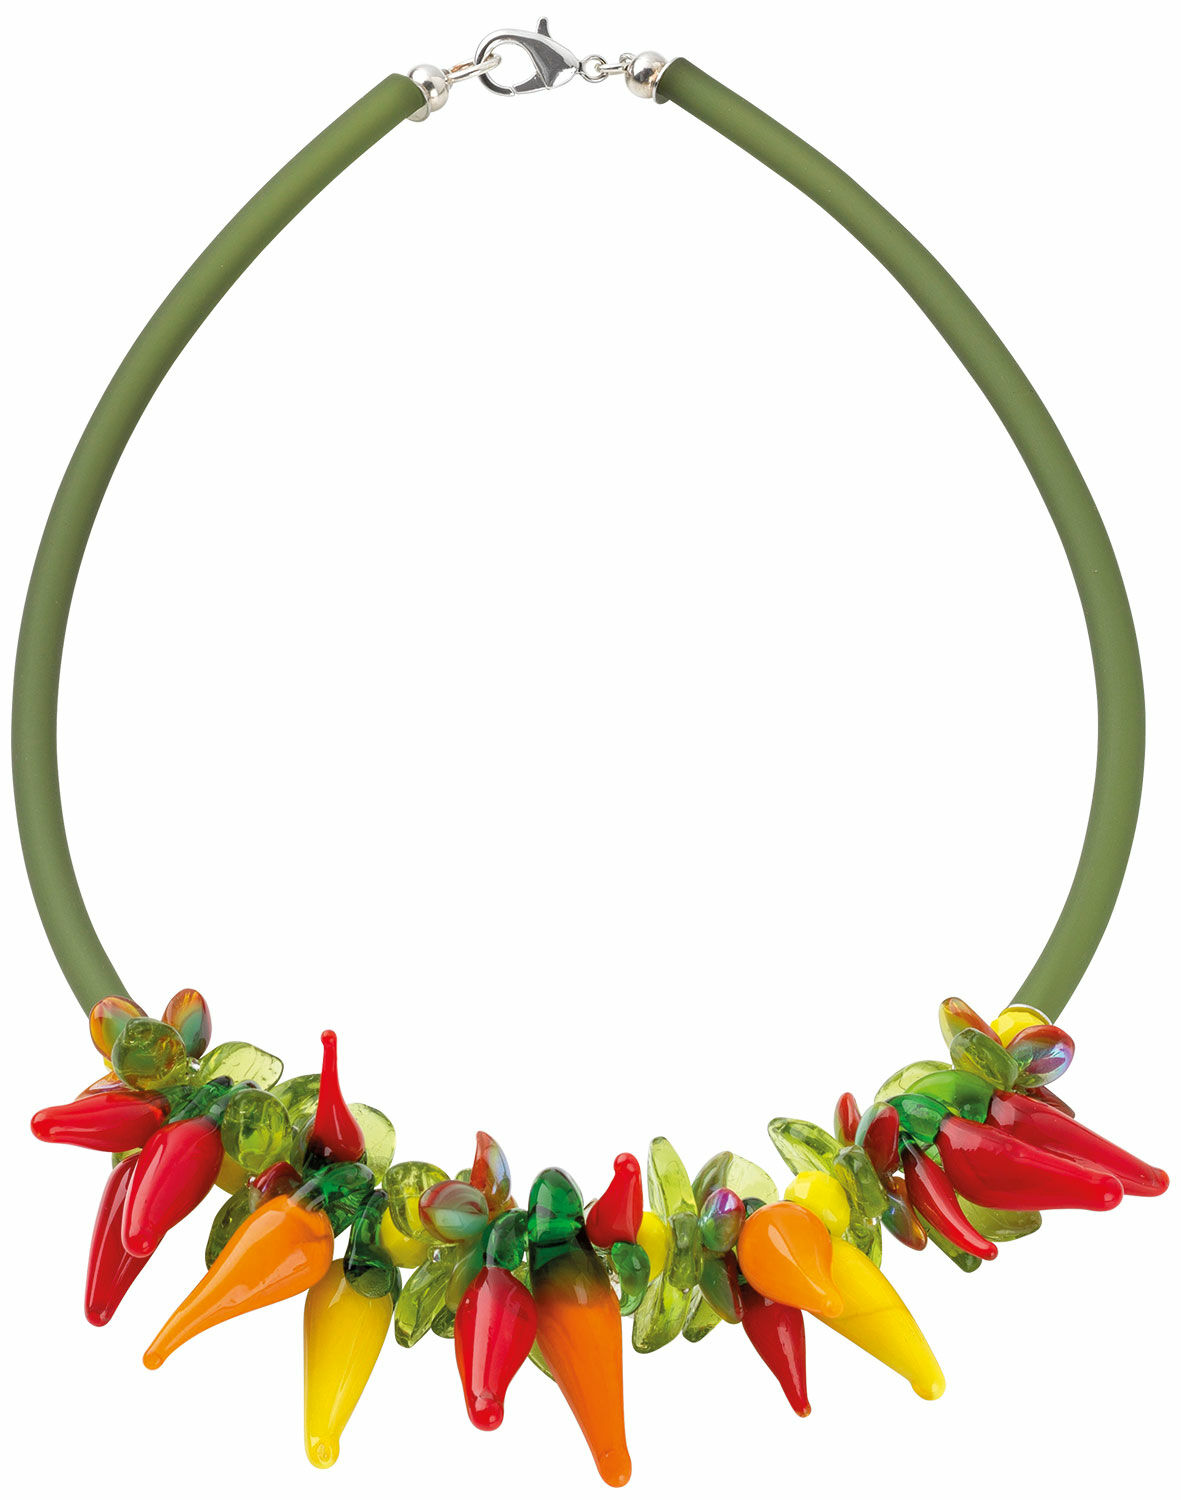 Necklace "Hot Chilli" by Anna Mütz